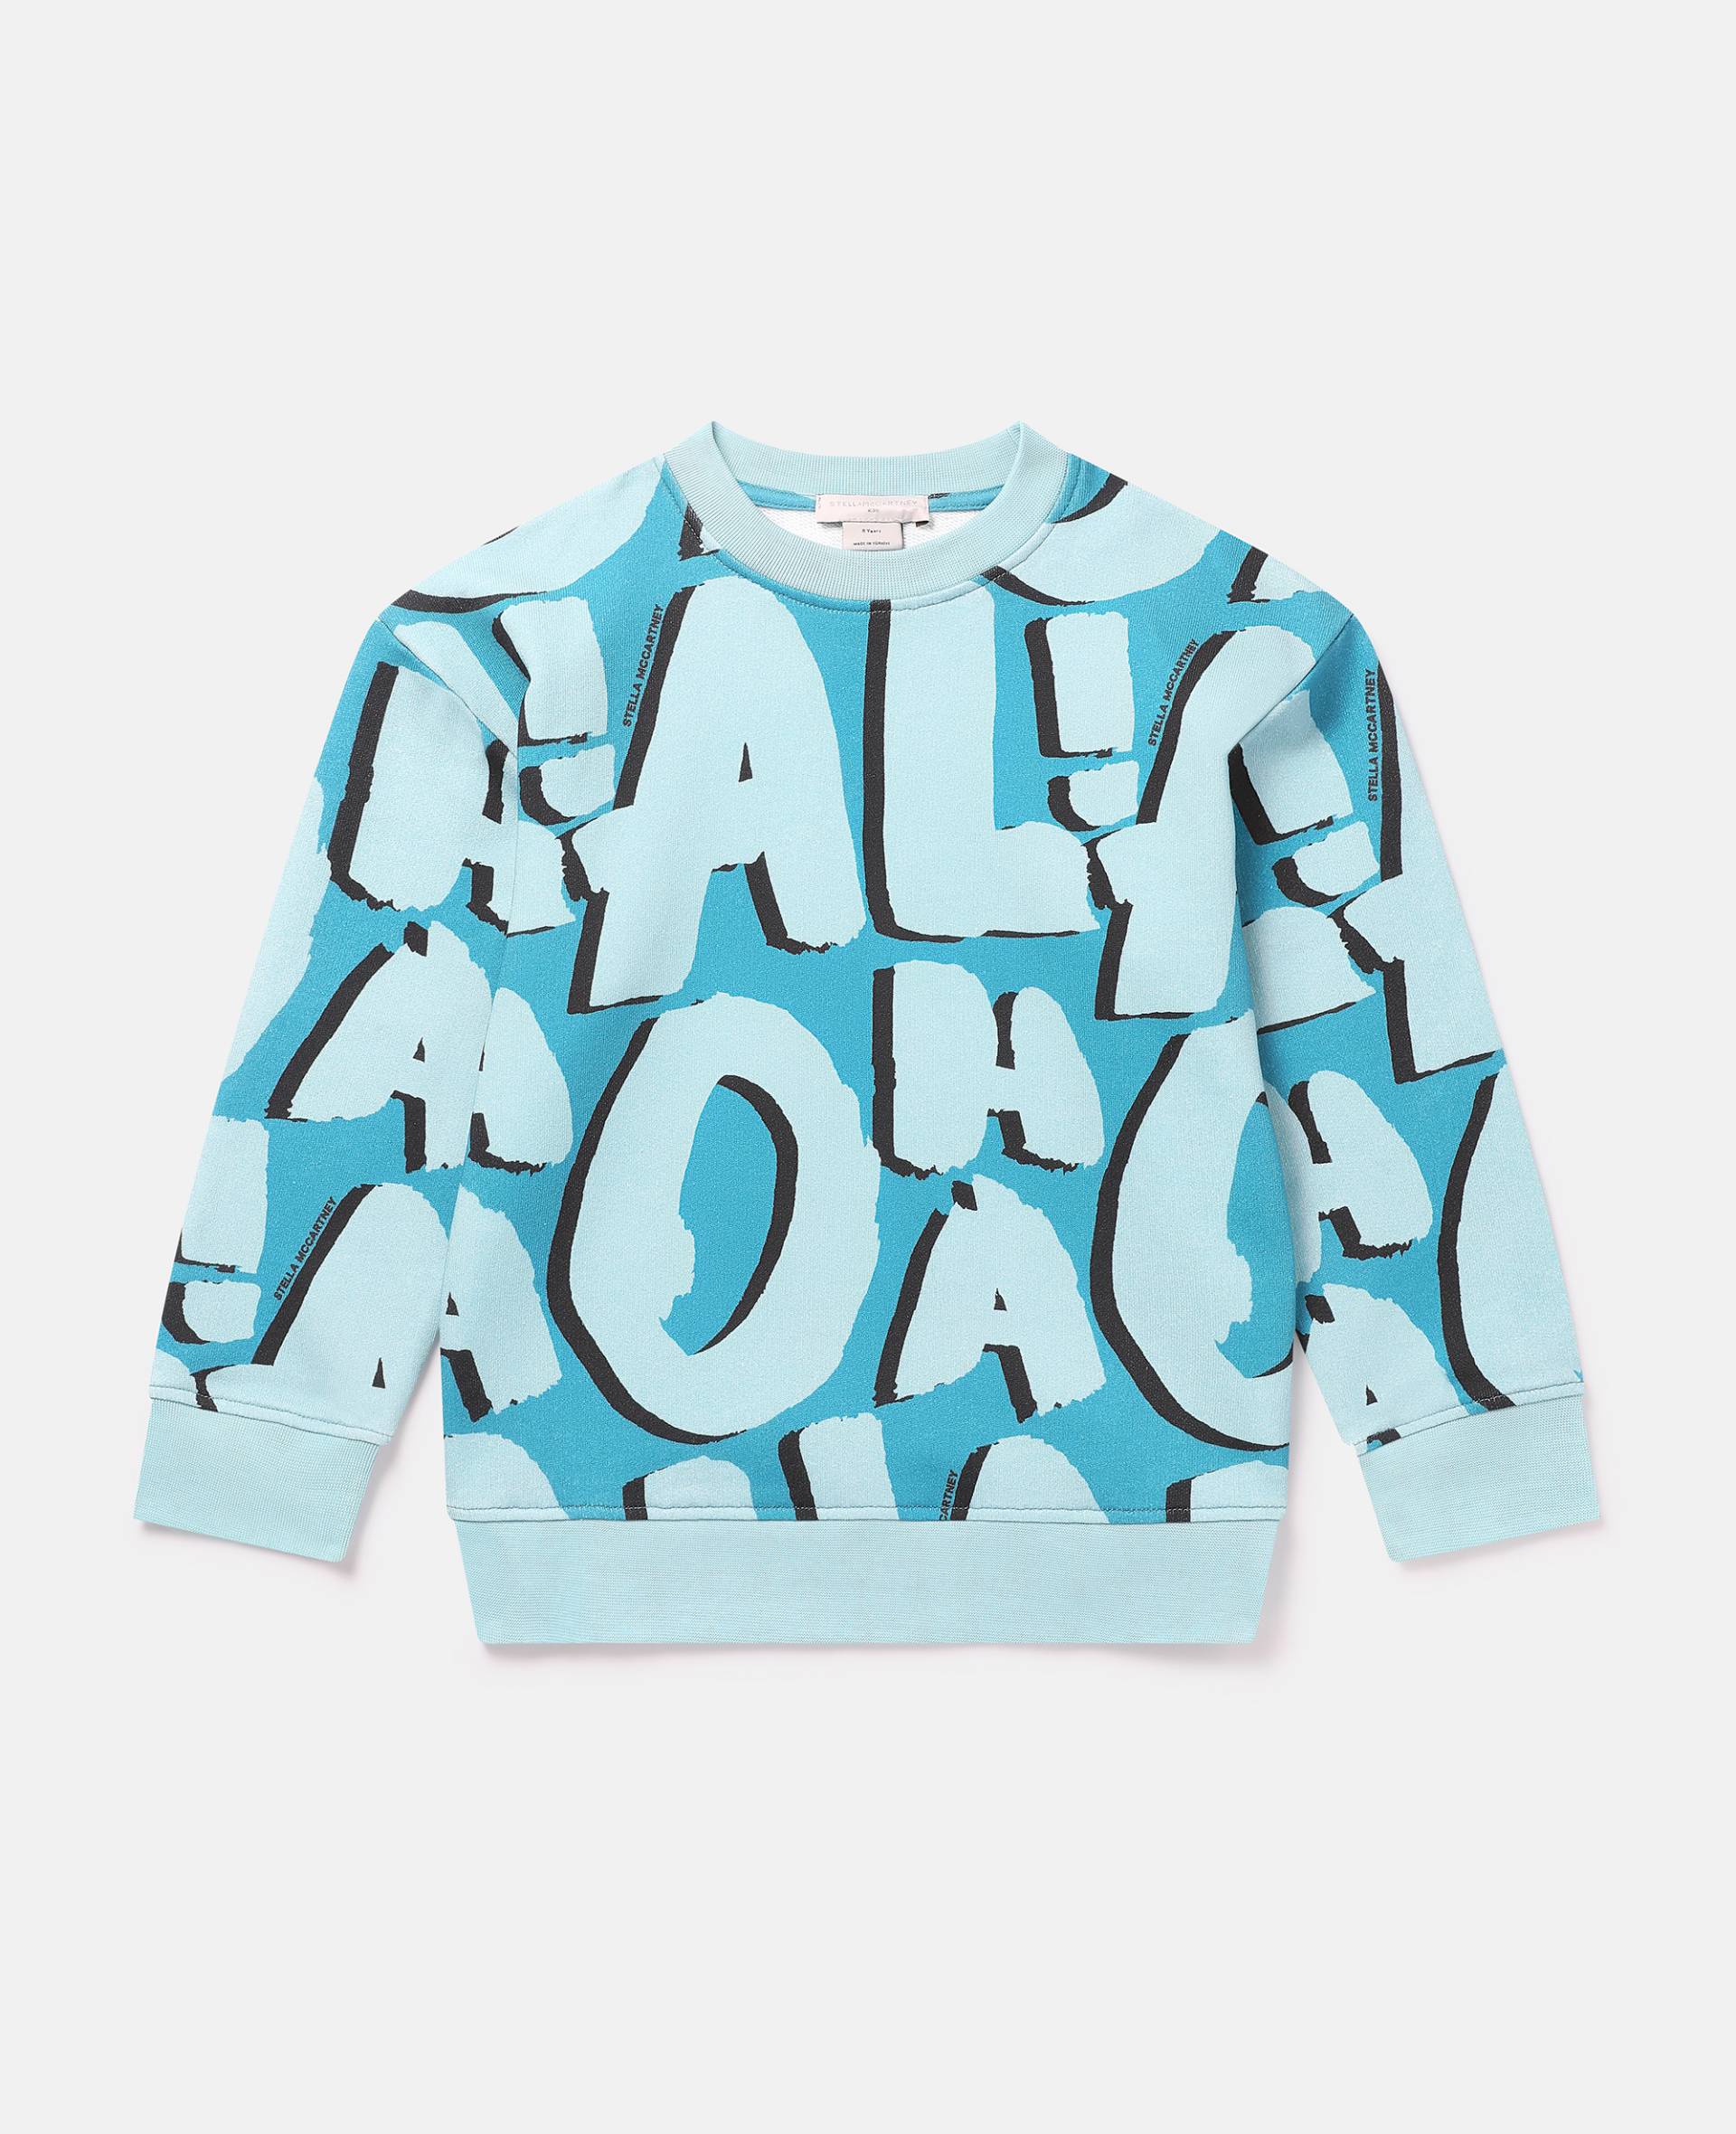 Stella McCartney - Aloha Lettering Sweatshirt, Frau, Bright Blue, Größe: 6 von Stella McCartney